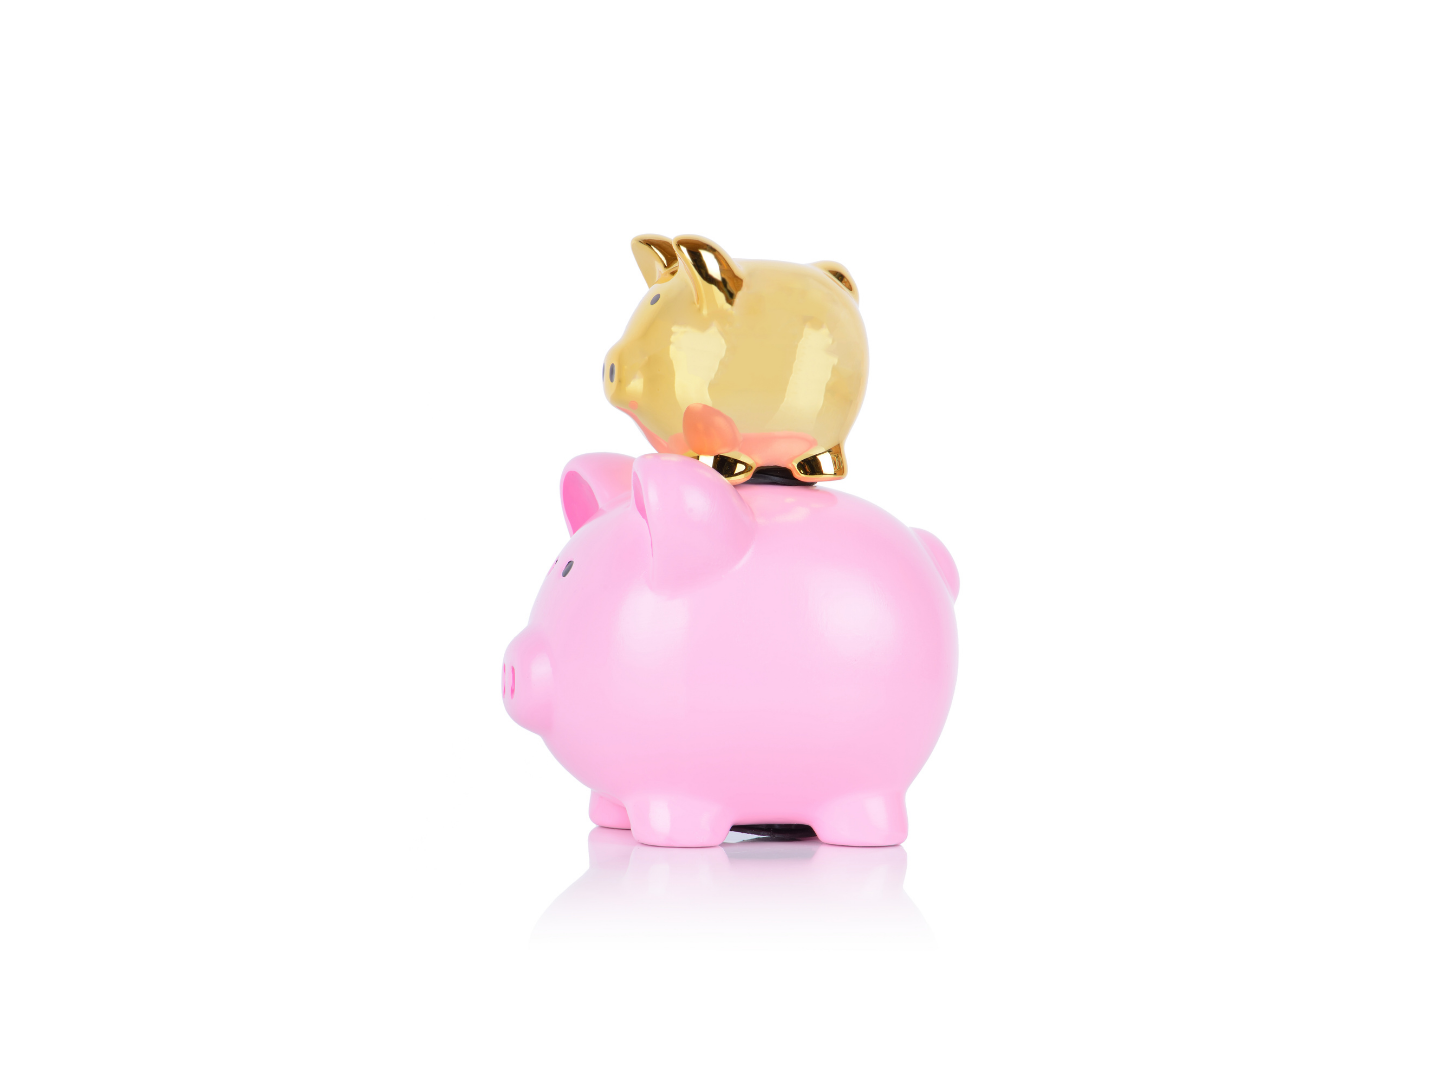 a pink piggy bank with a smaller gold piggy bank on top